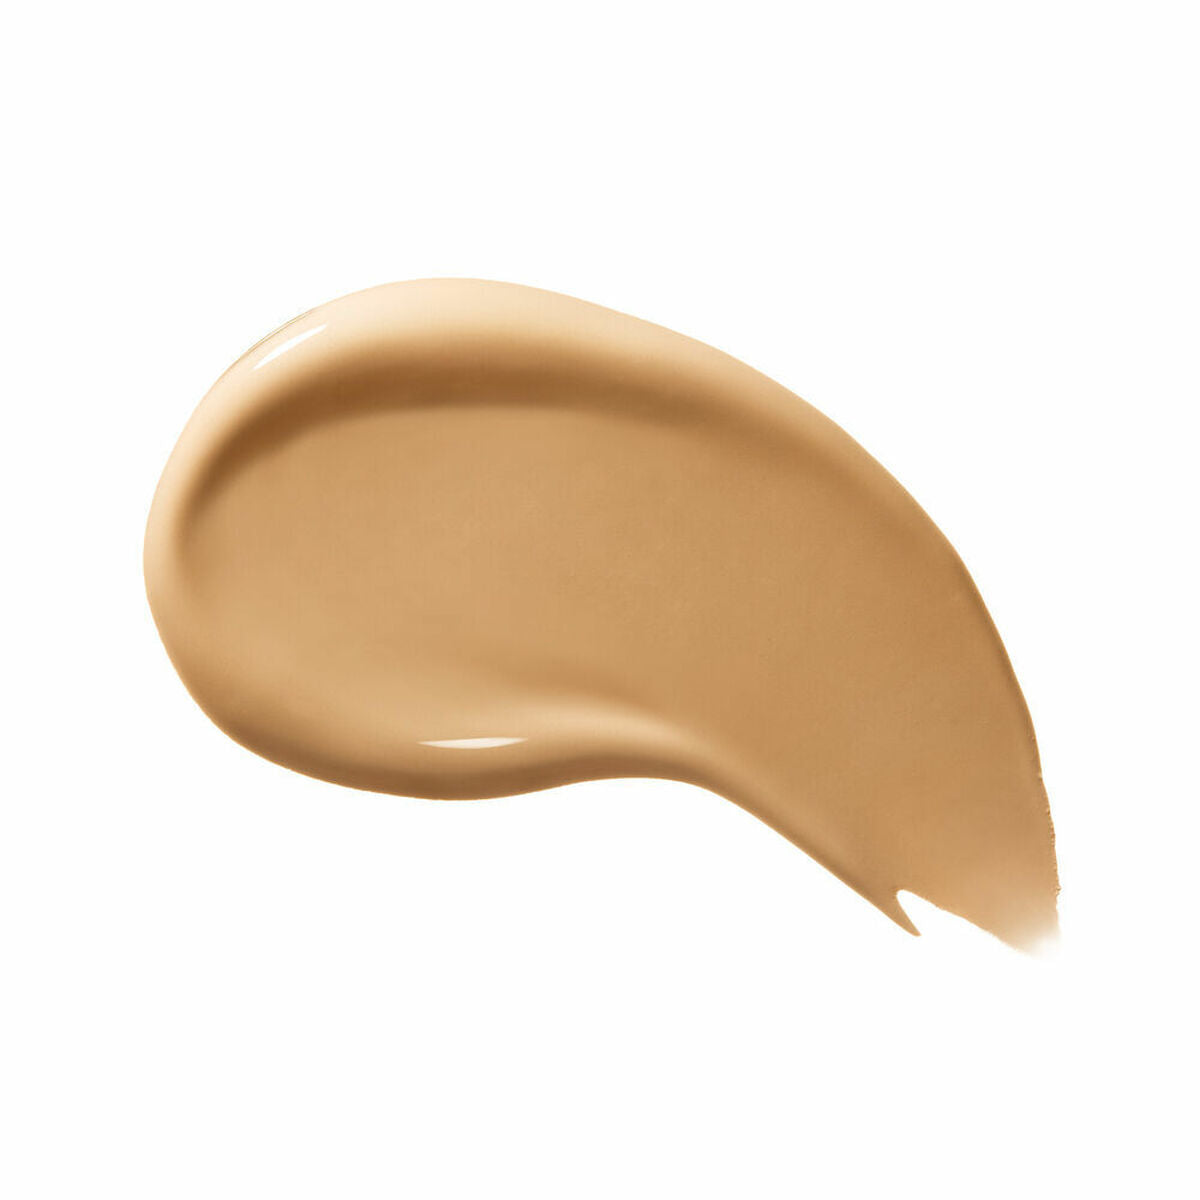 Fluid Makeup Basis Shiseido Synchro Skin Radiant Lifting Nº 340 Oak 30 ml - CA International  